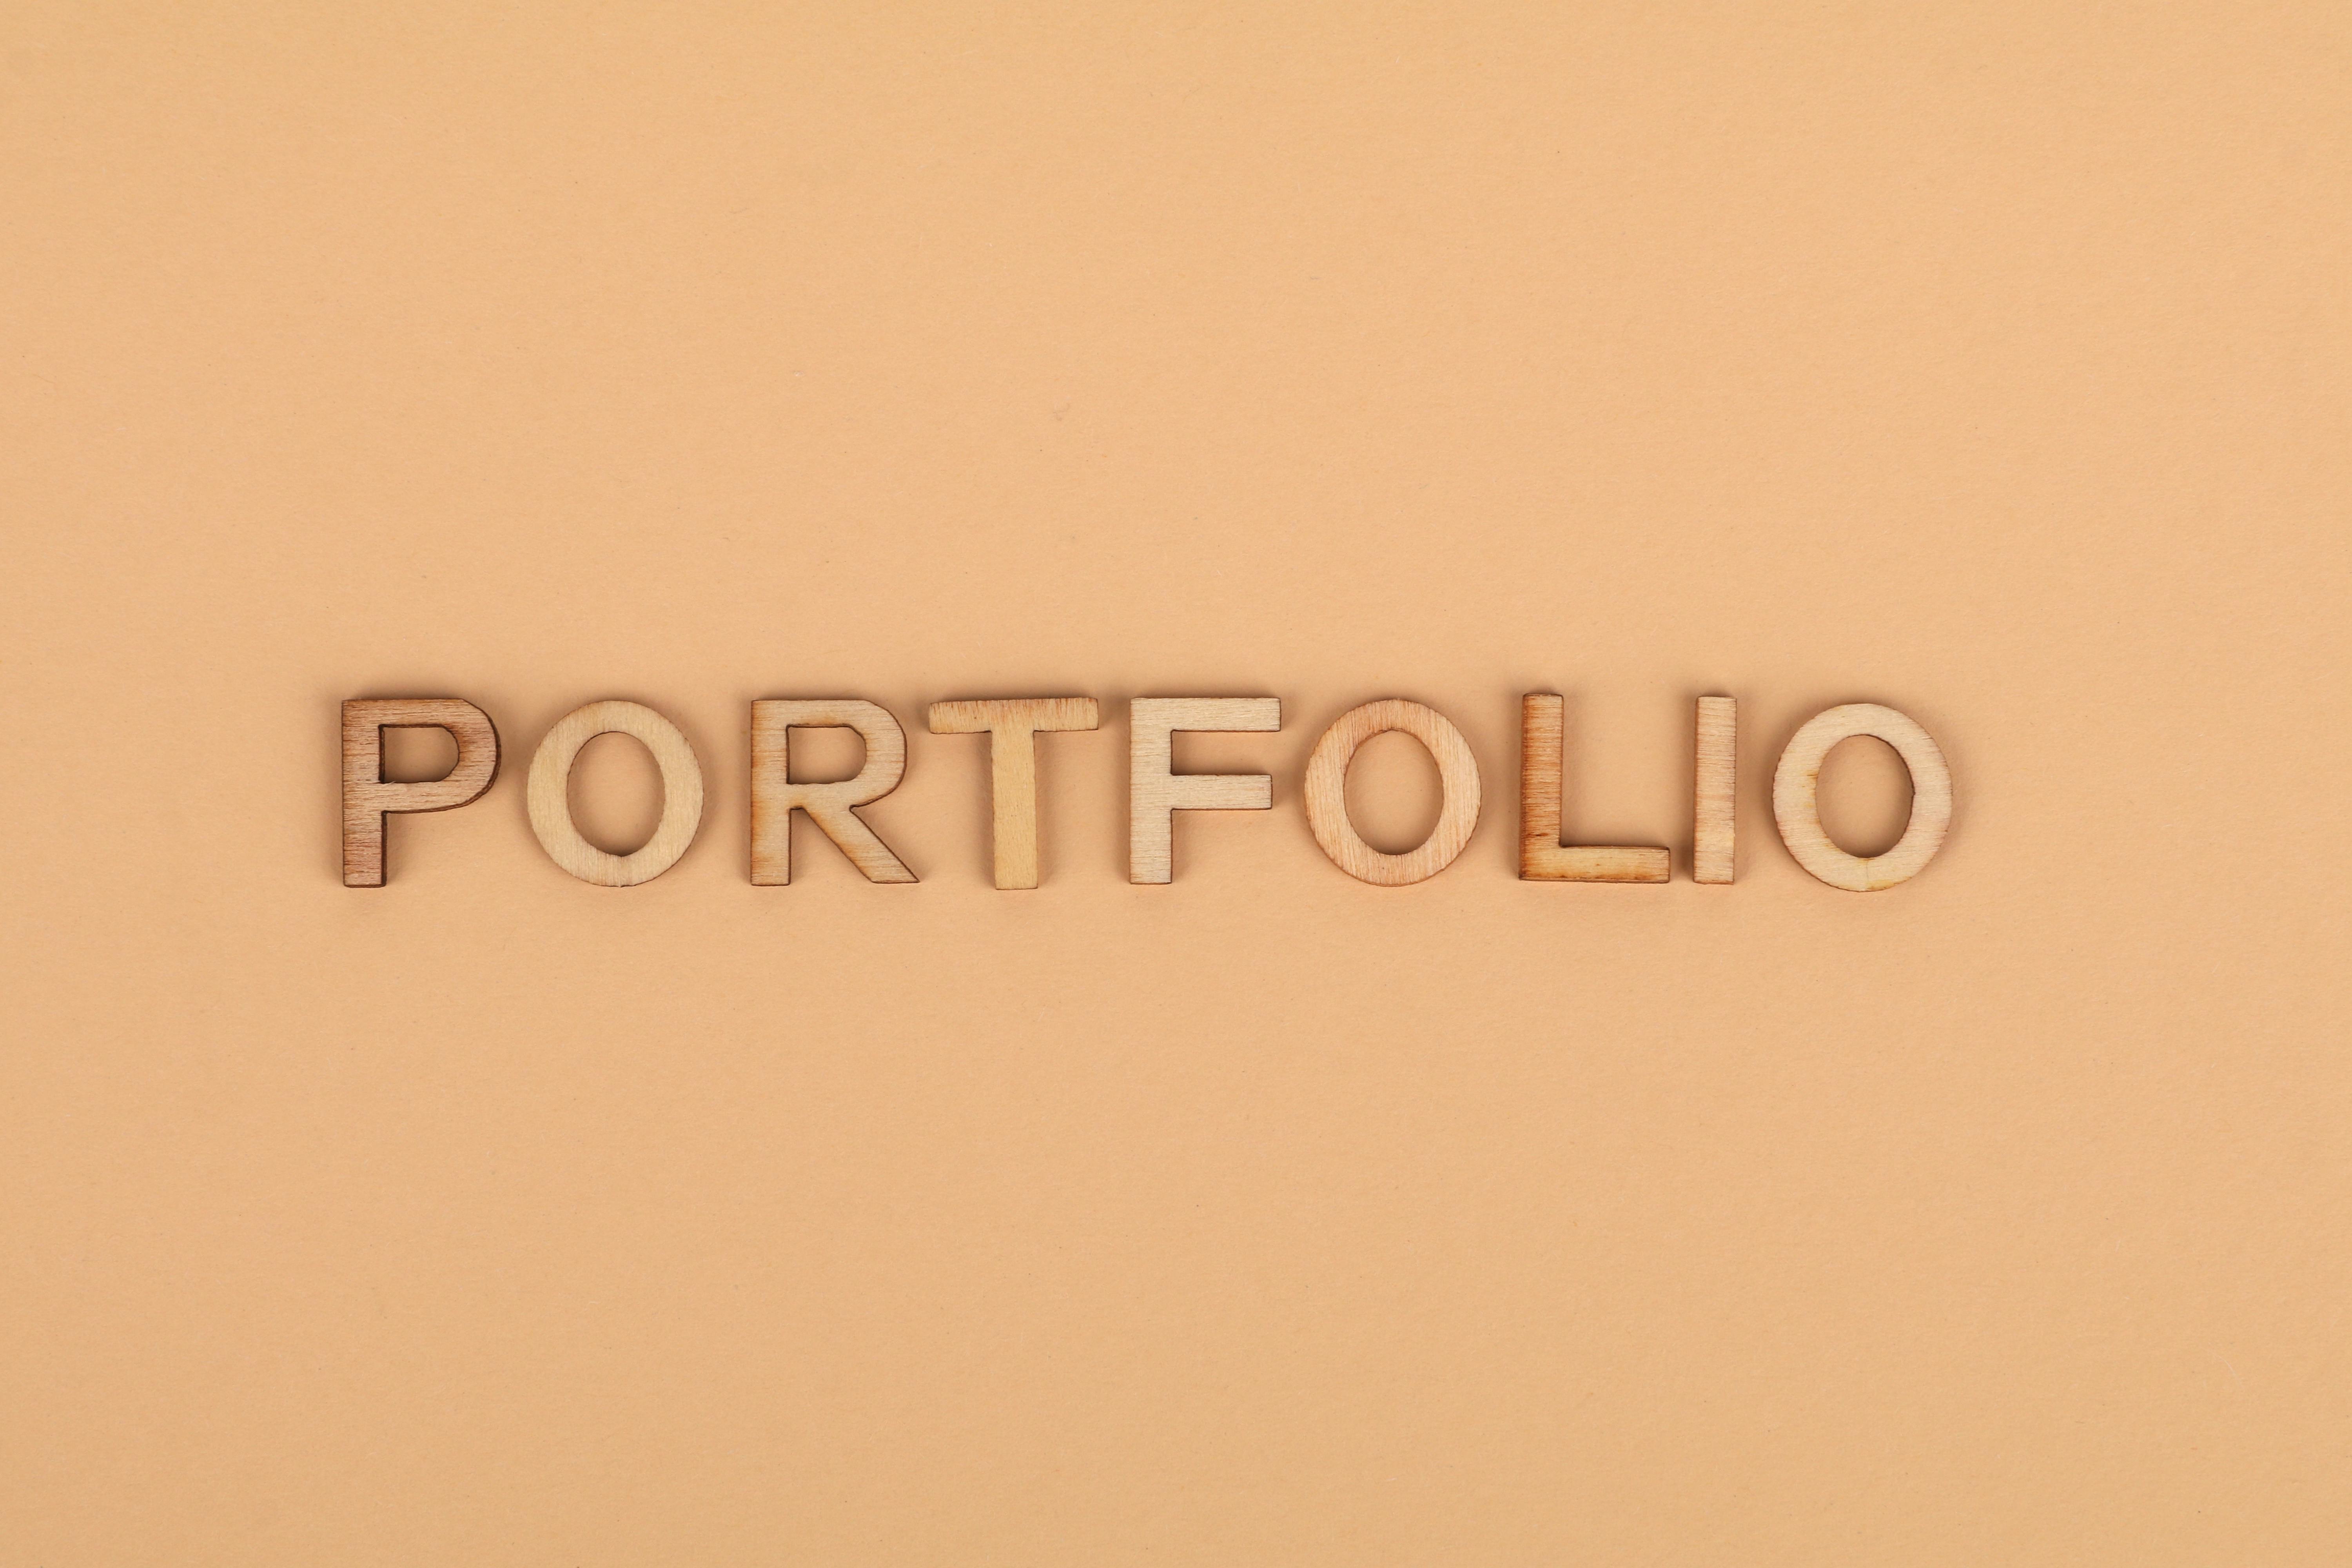 Portfolio Photos Download The BEST Free Portfolio Stock Photos  HD Images